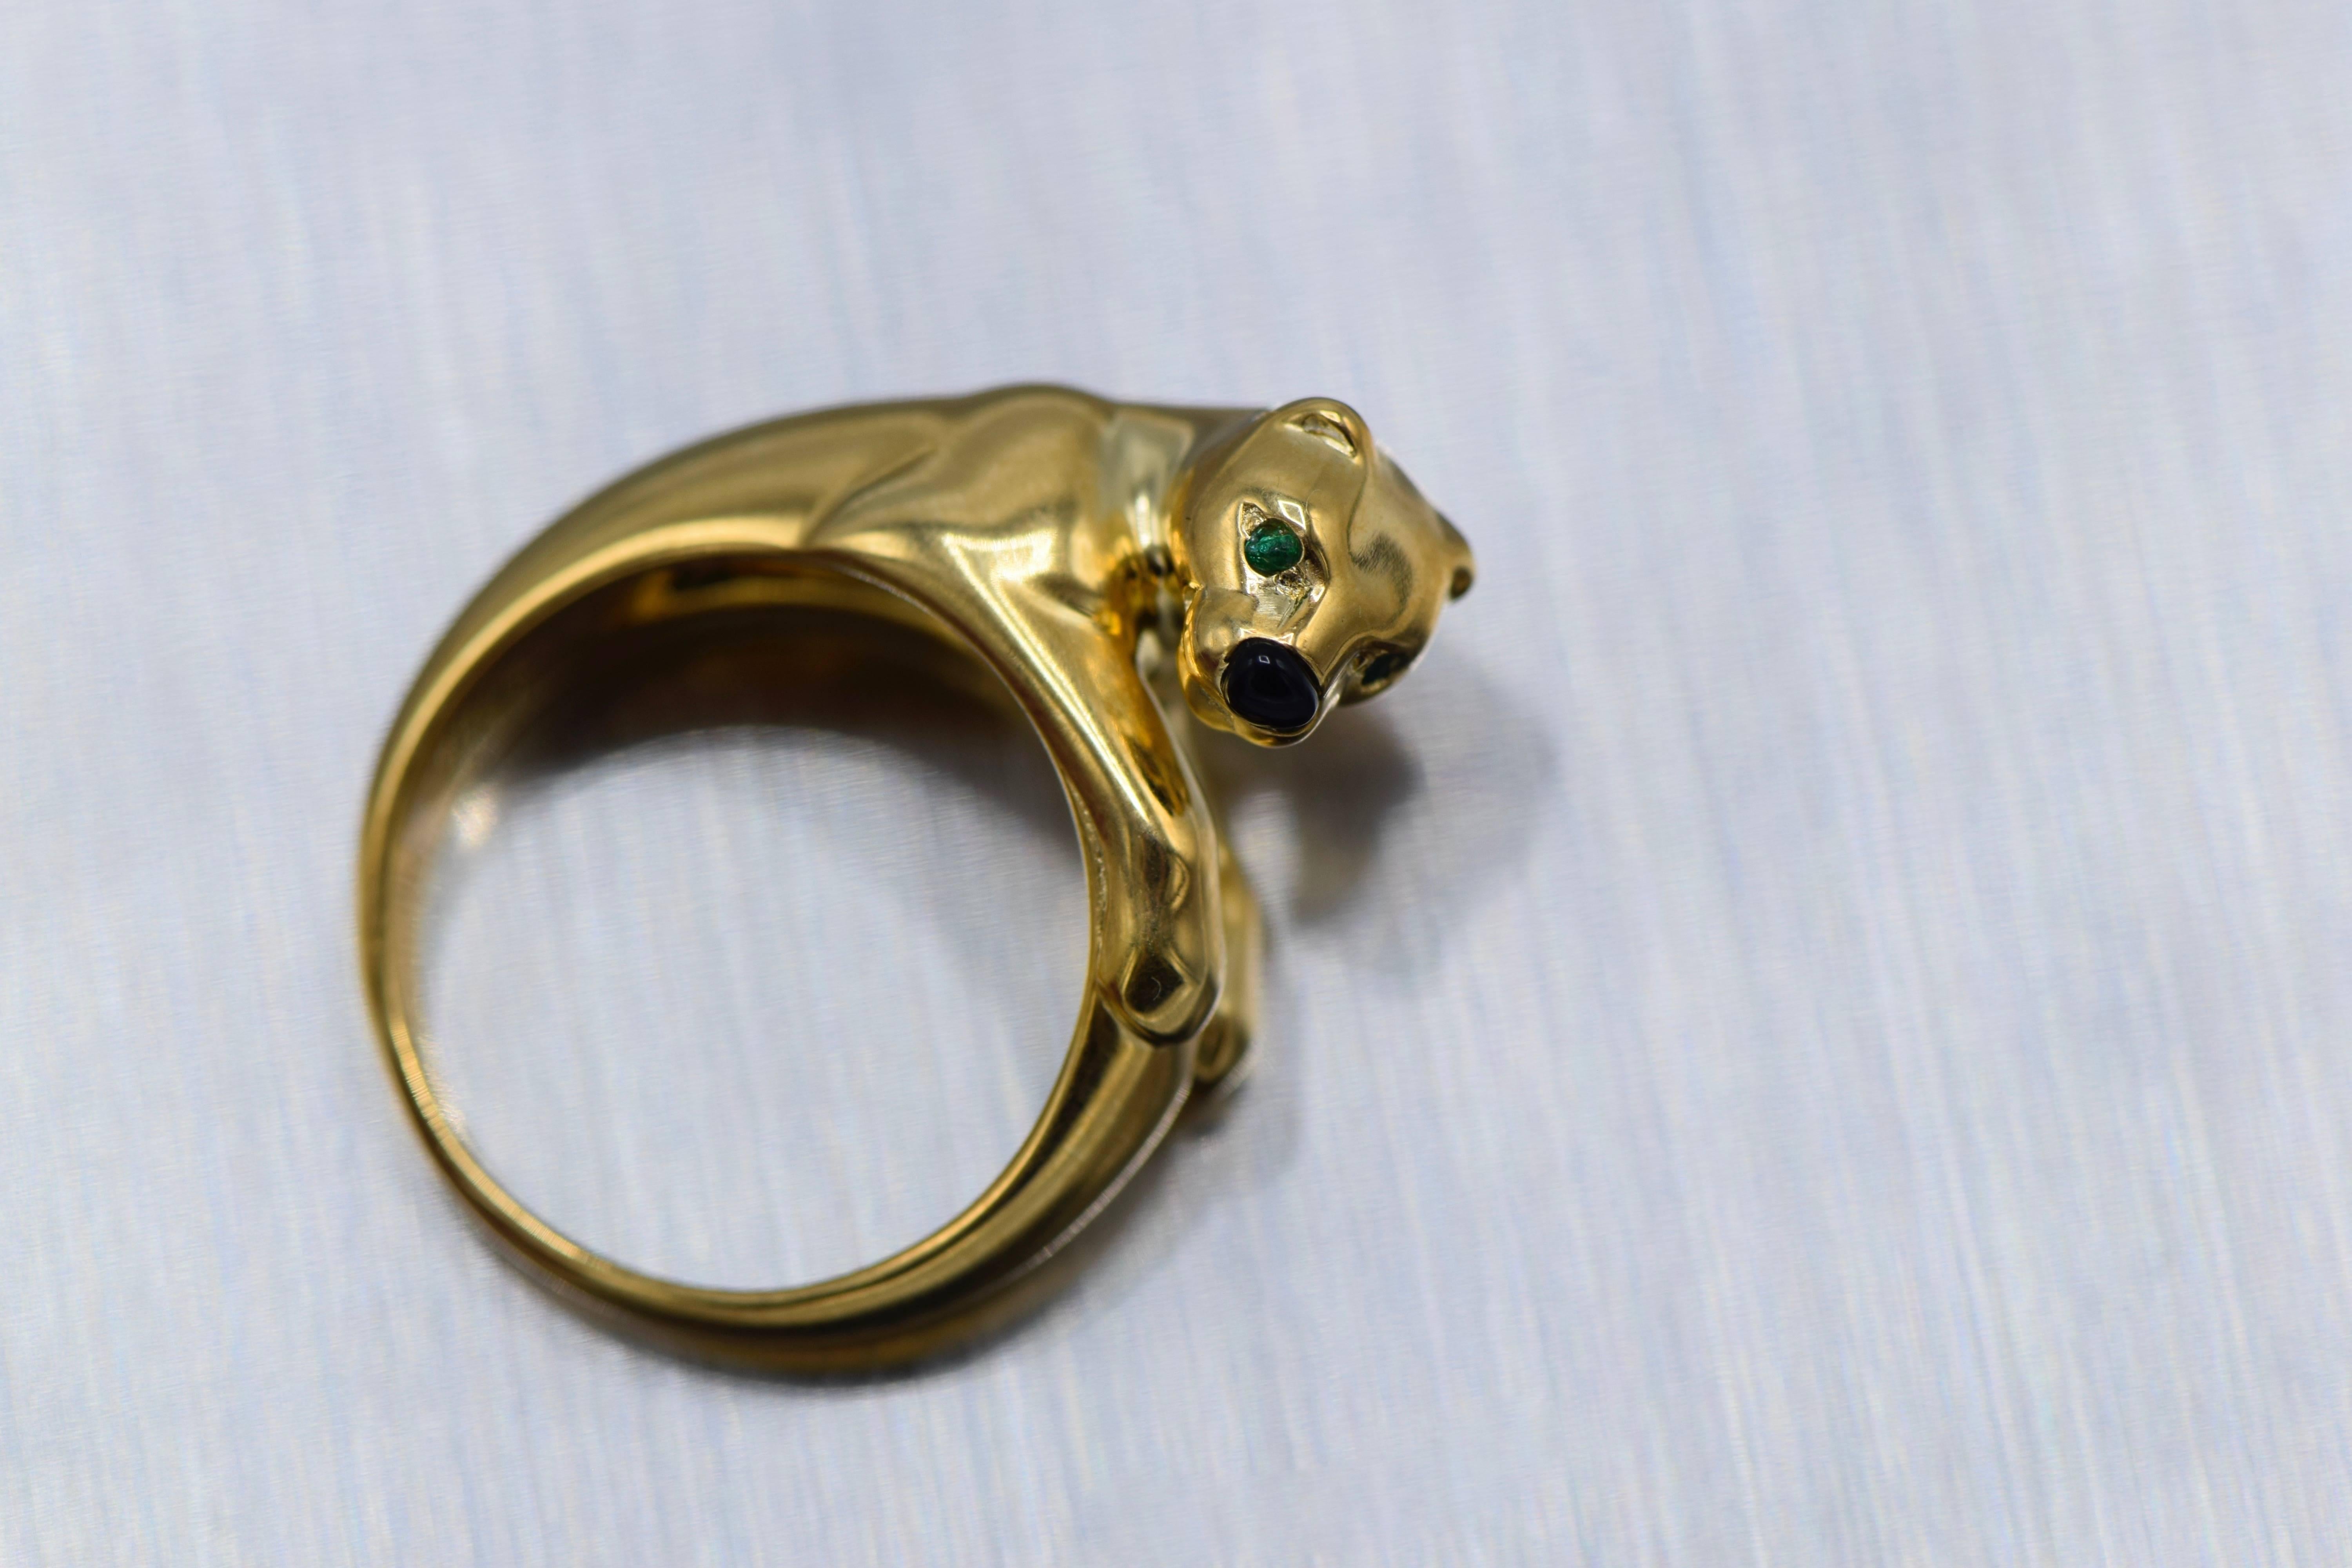 Cartier, Onyx, Emerald Ice Panther 18 Karat Gold Ring

Size 6.5 